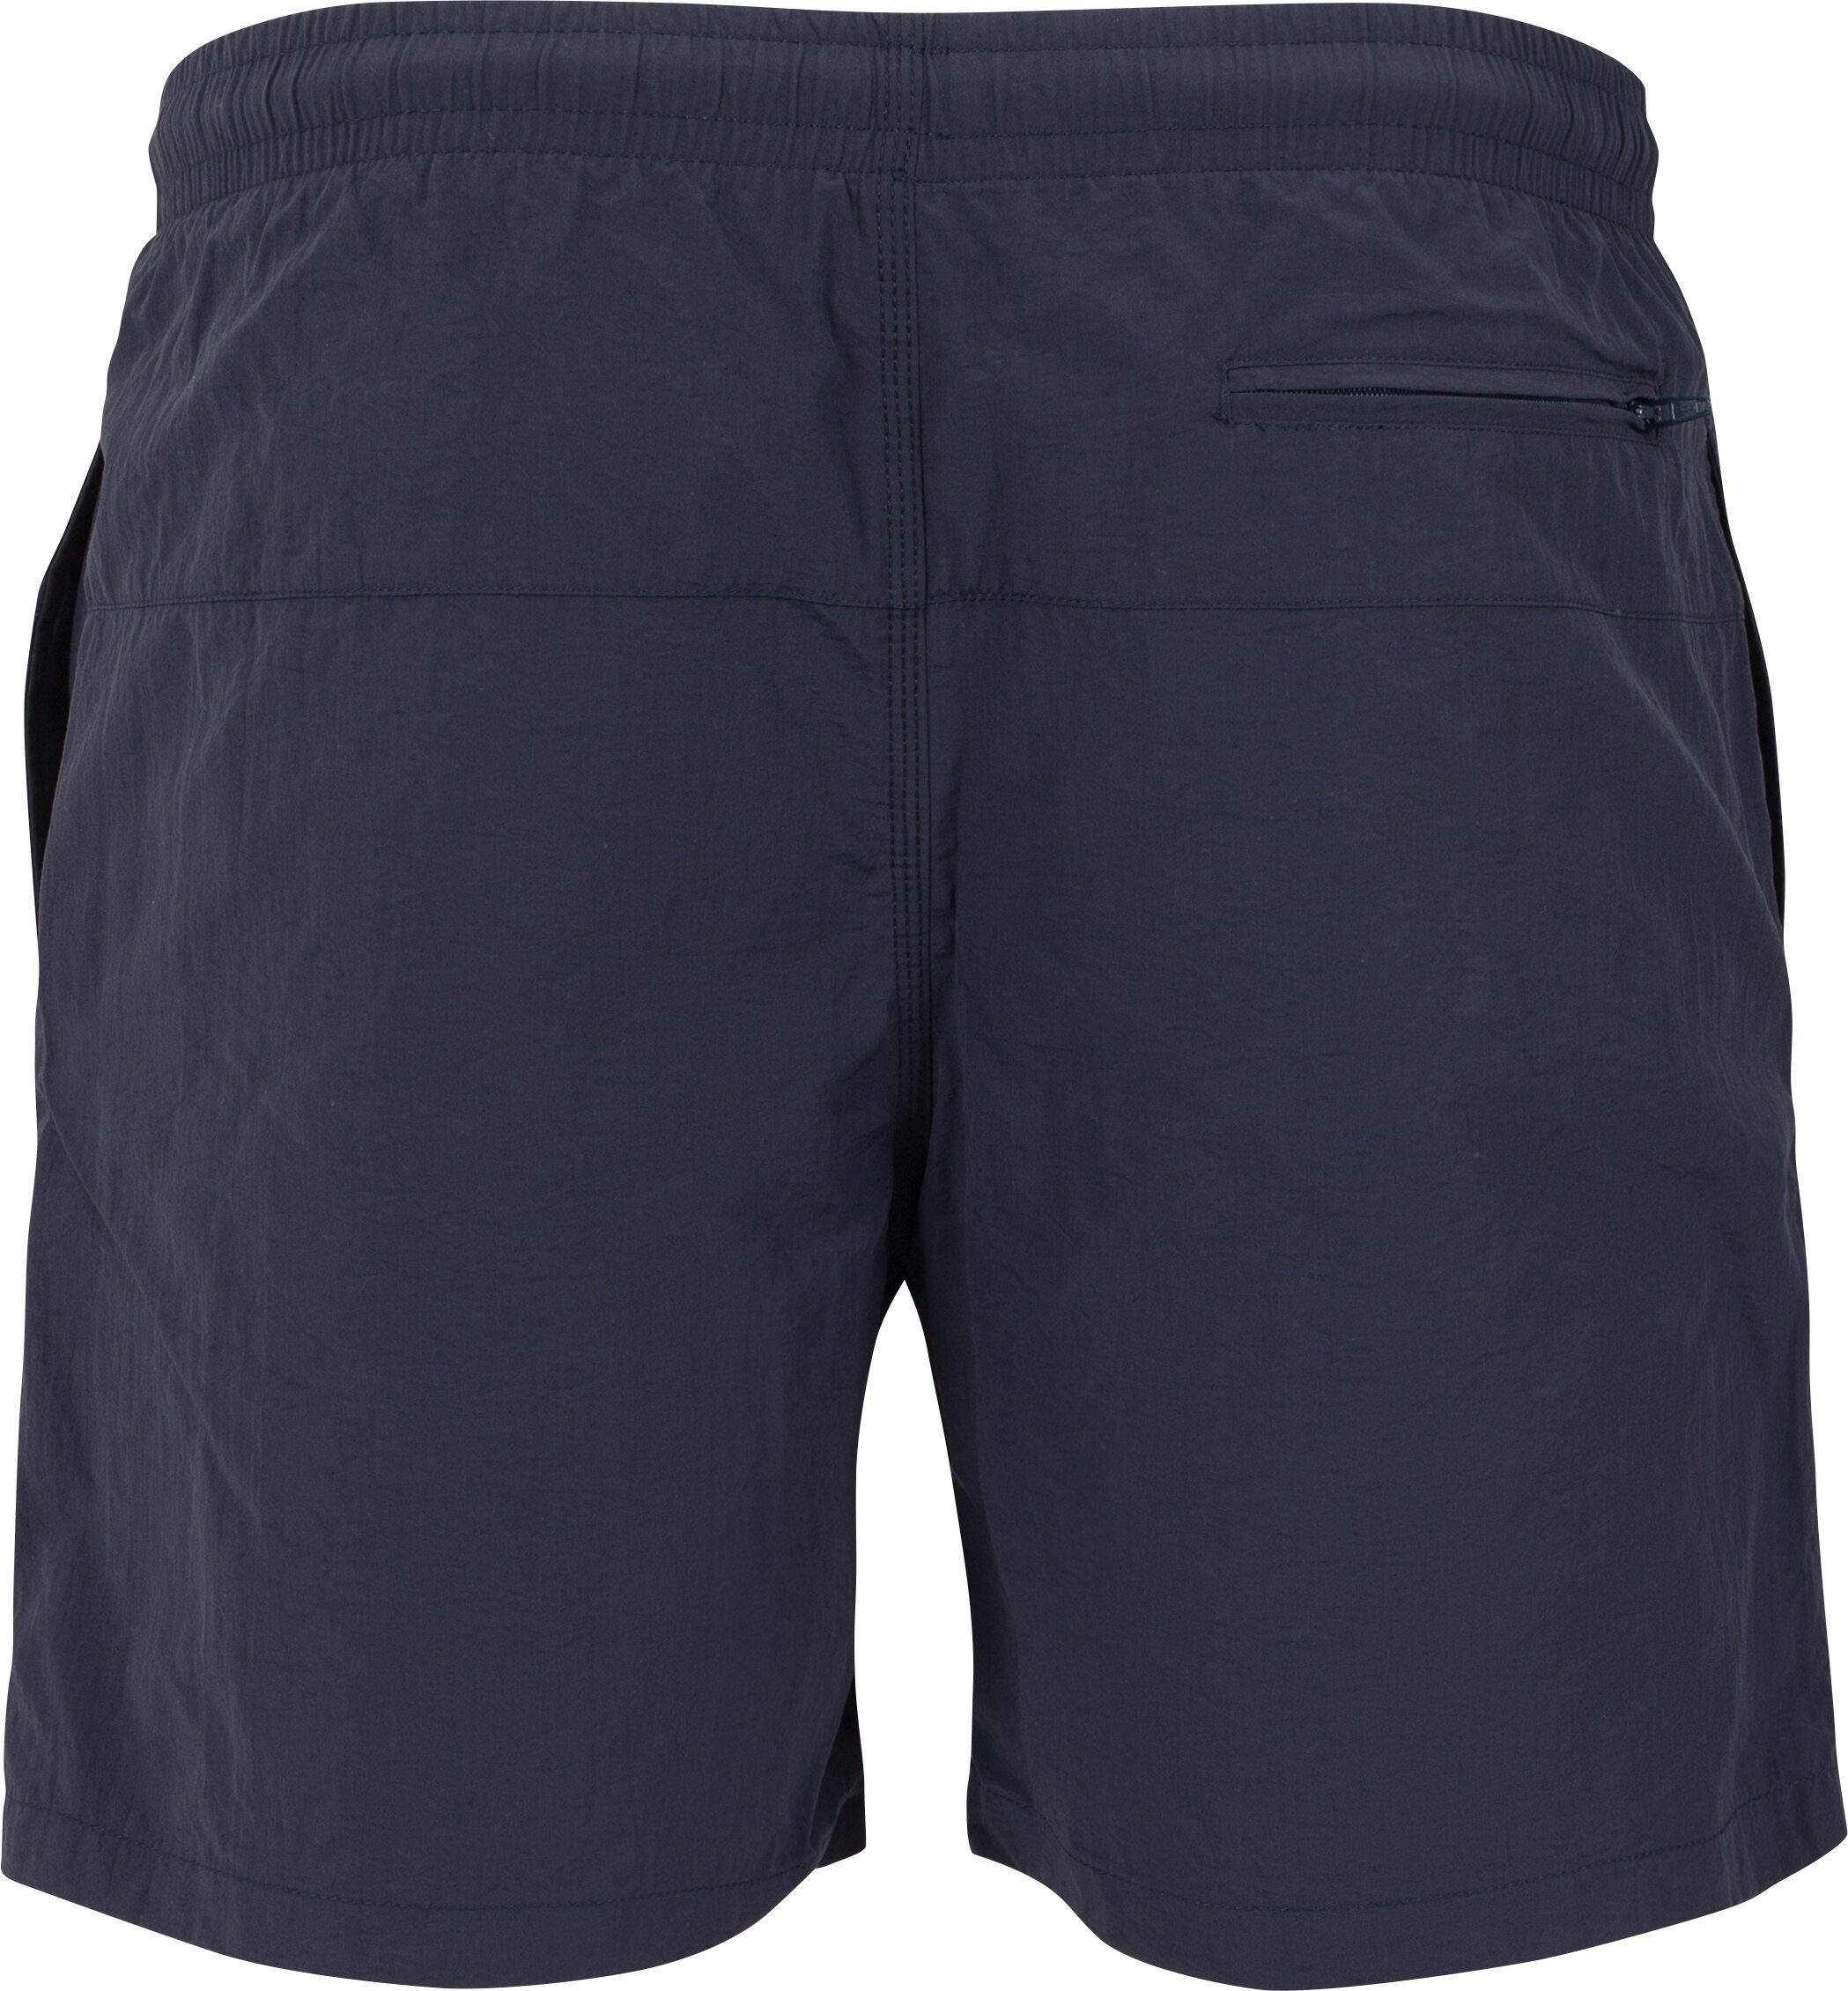 URBAN CLASSICS Swim navy/navy Badeshorts Herren Shorts